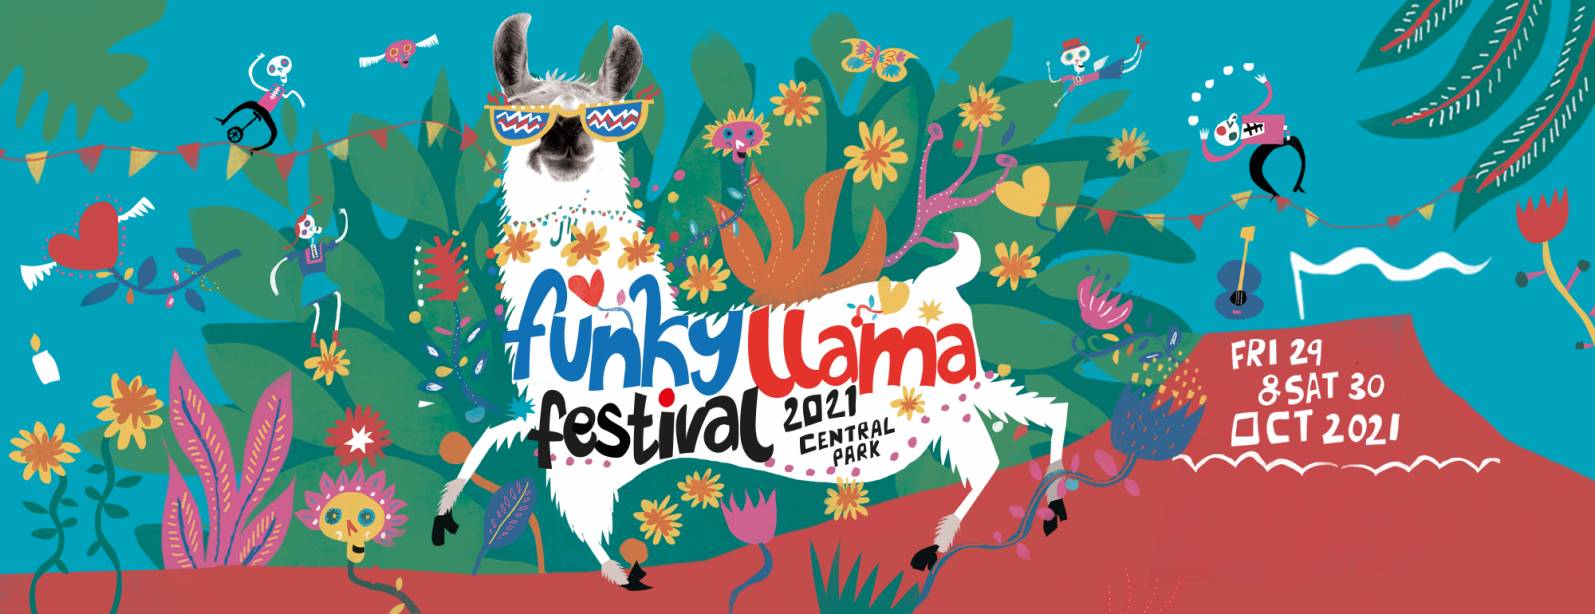 Funky Llama Festival 2021 Theatre Royal Plymouth